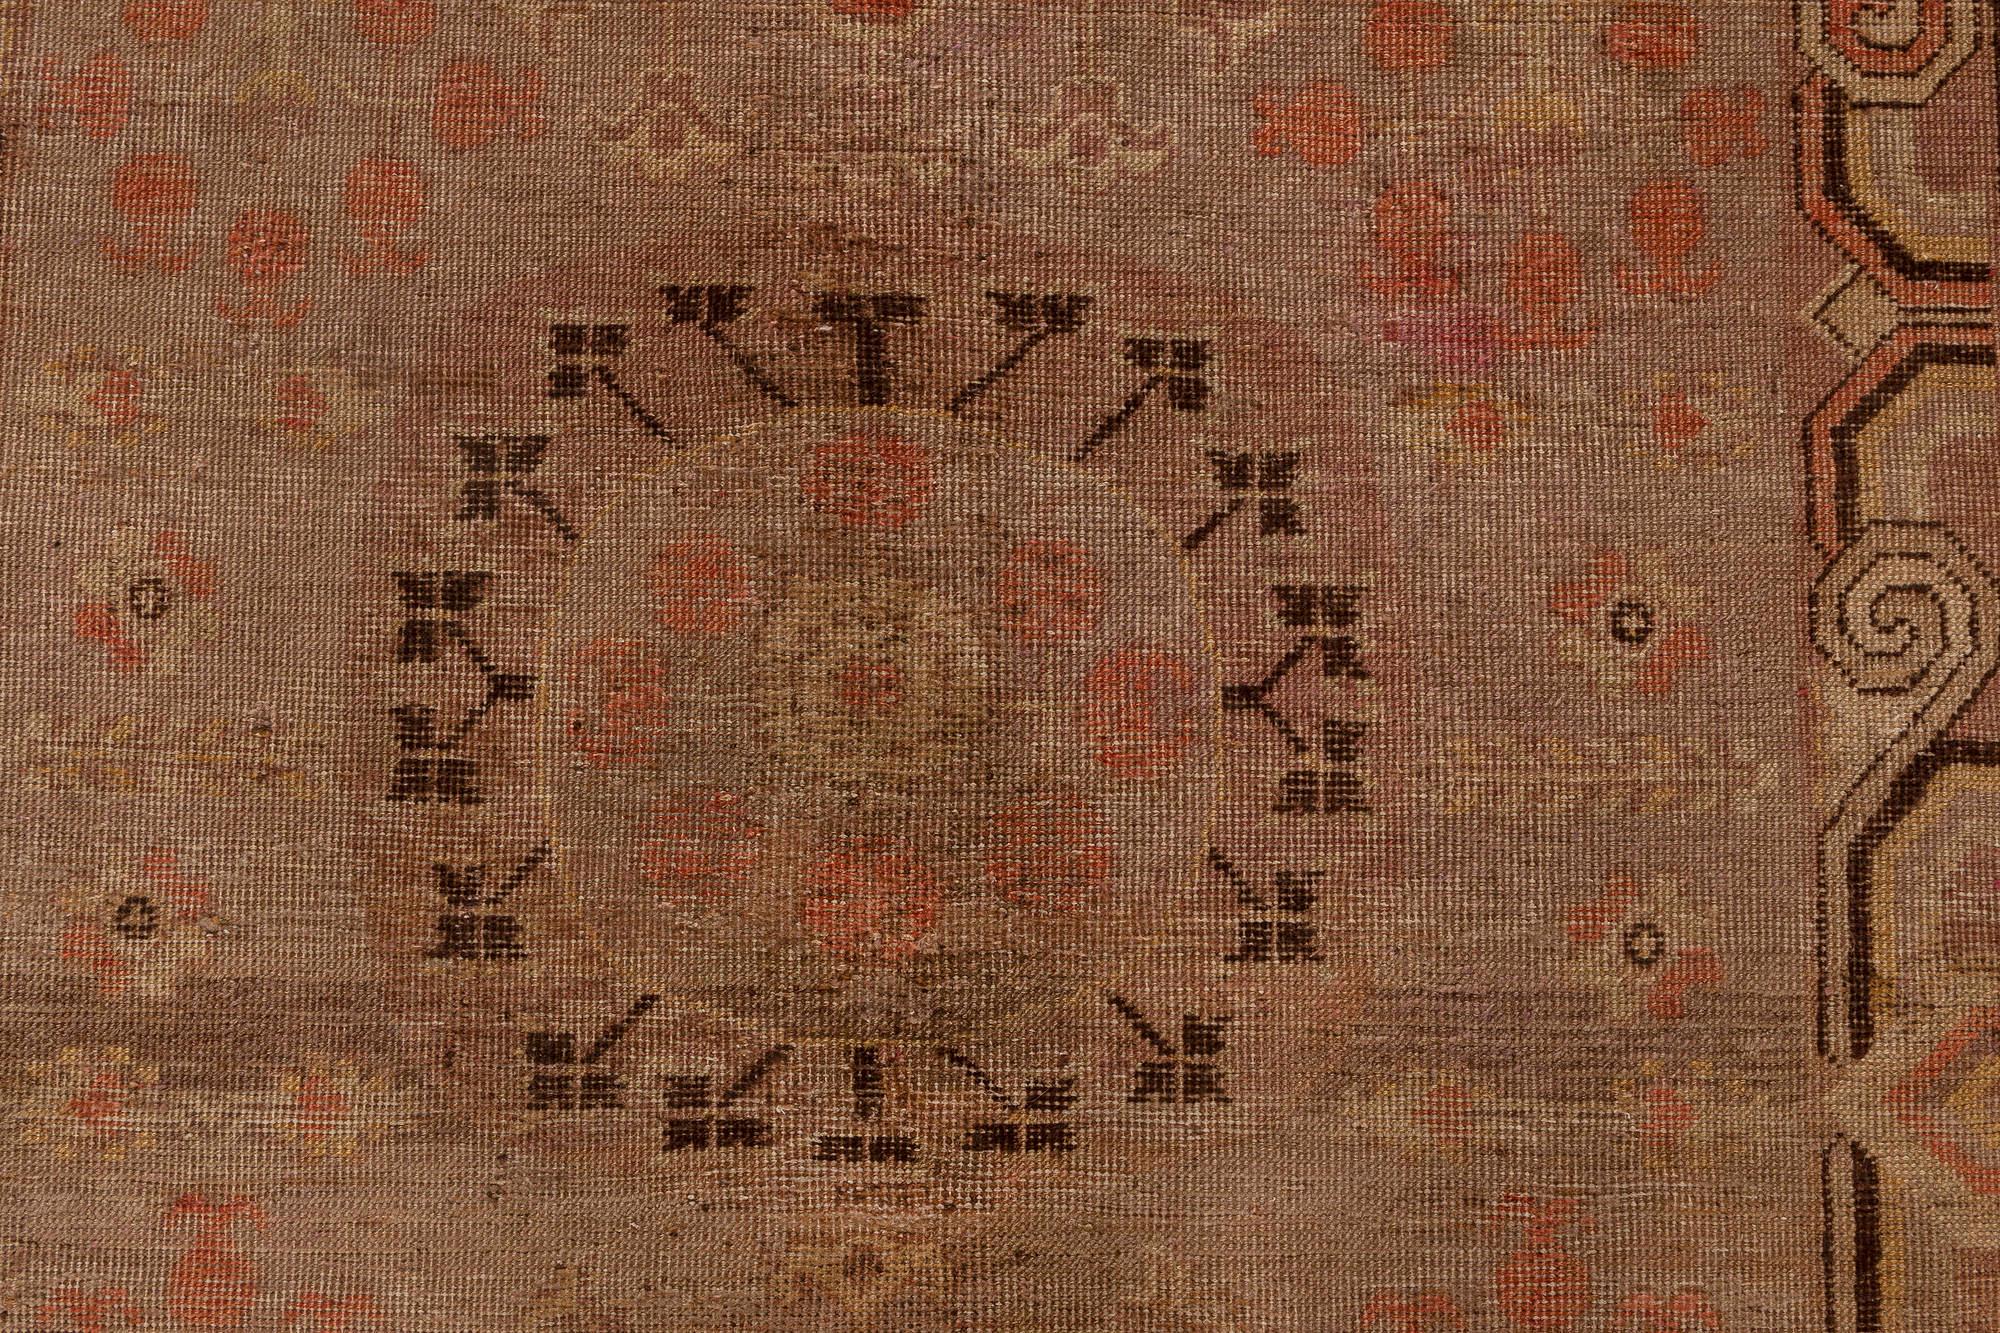 Midcentury Samarkand handmade wool rug.
Size: 4'8